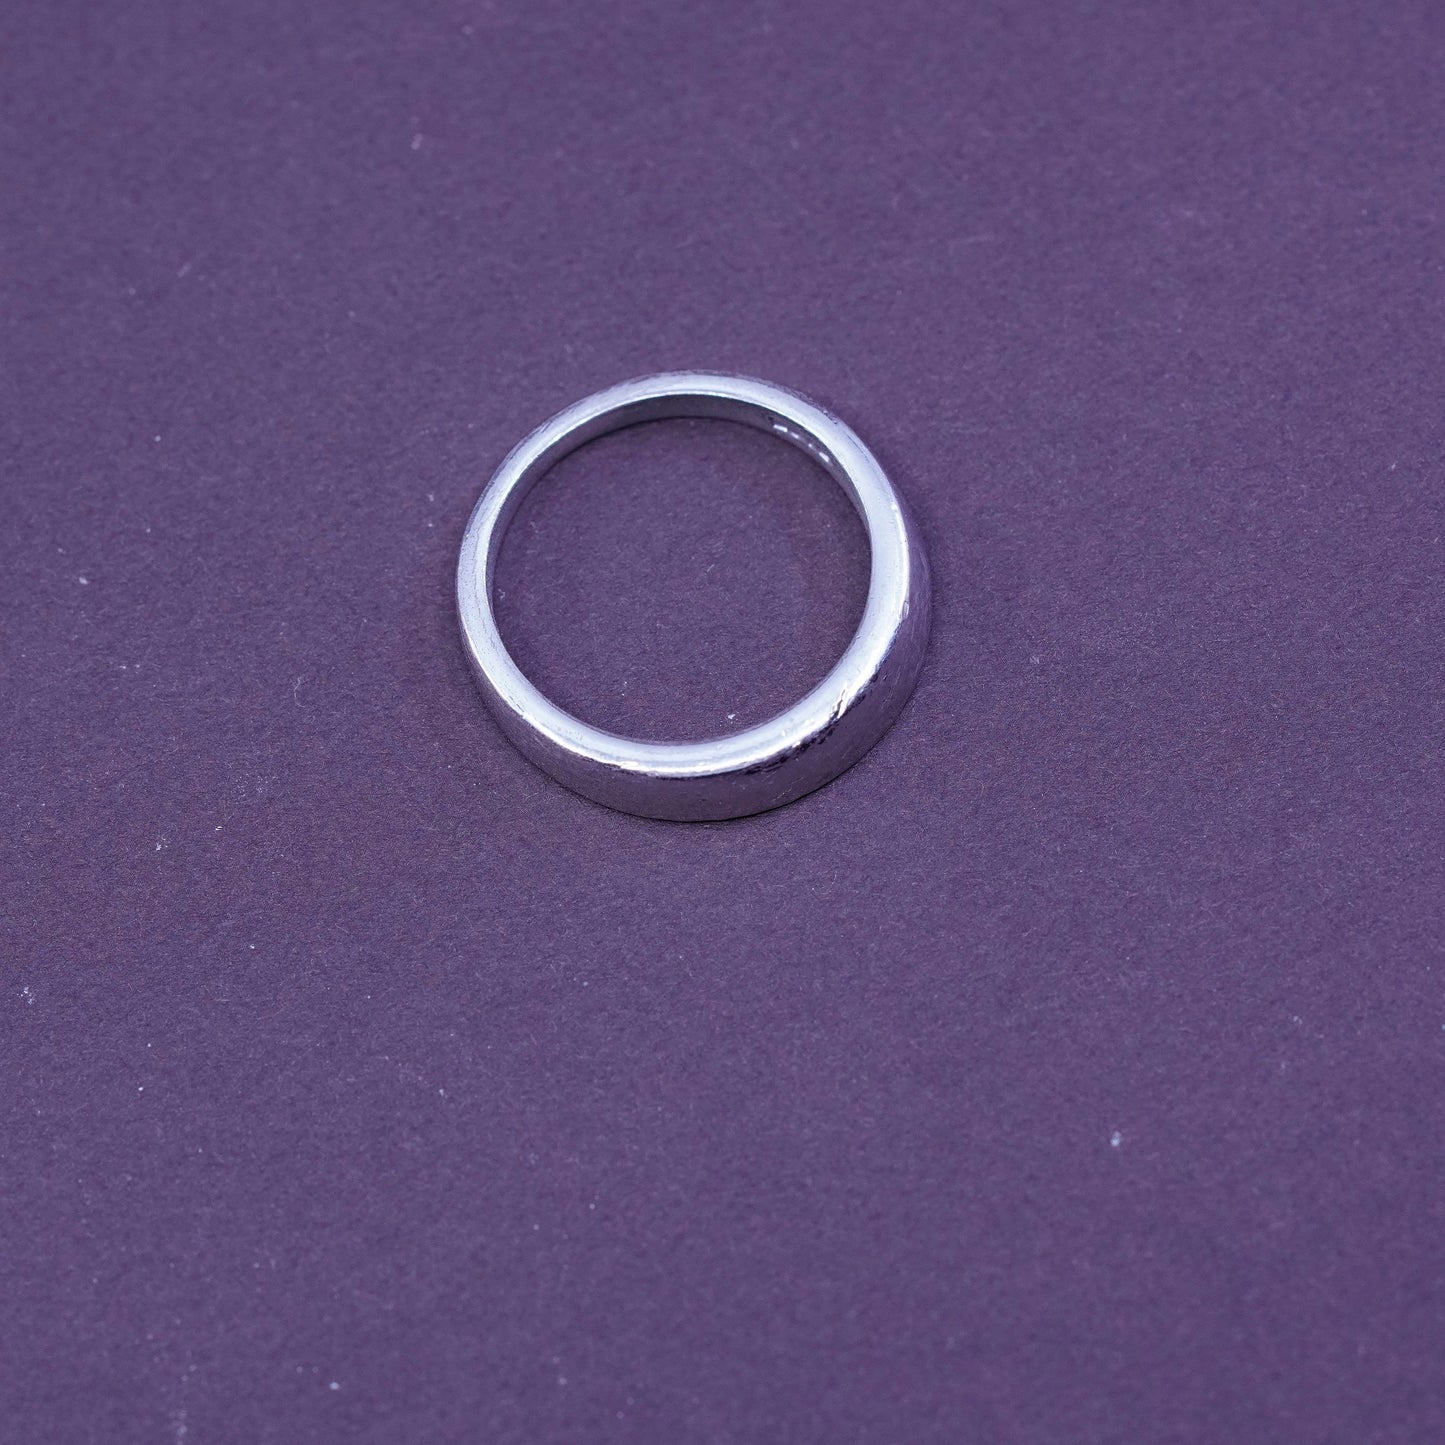 Size 6.25, vintage rage sterling silver handmade ring, 925 wedding band